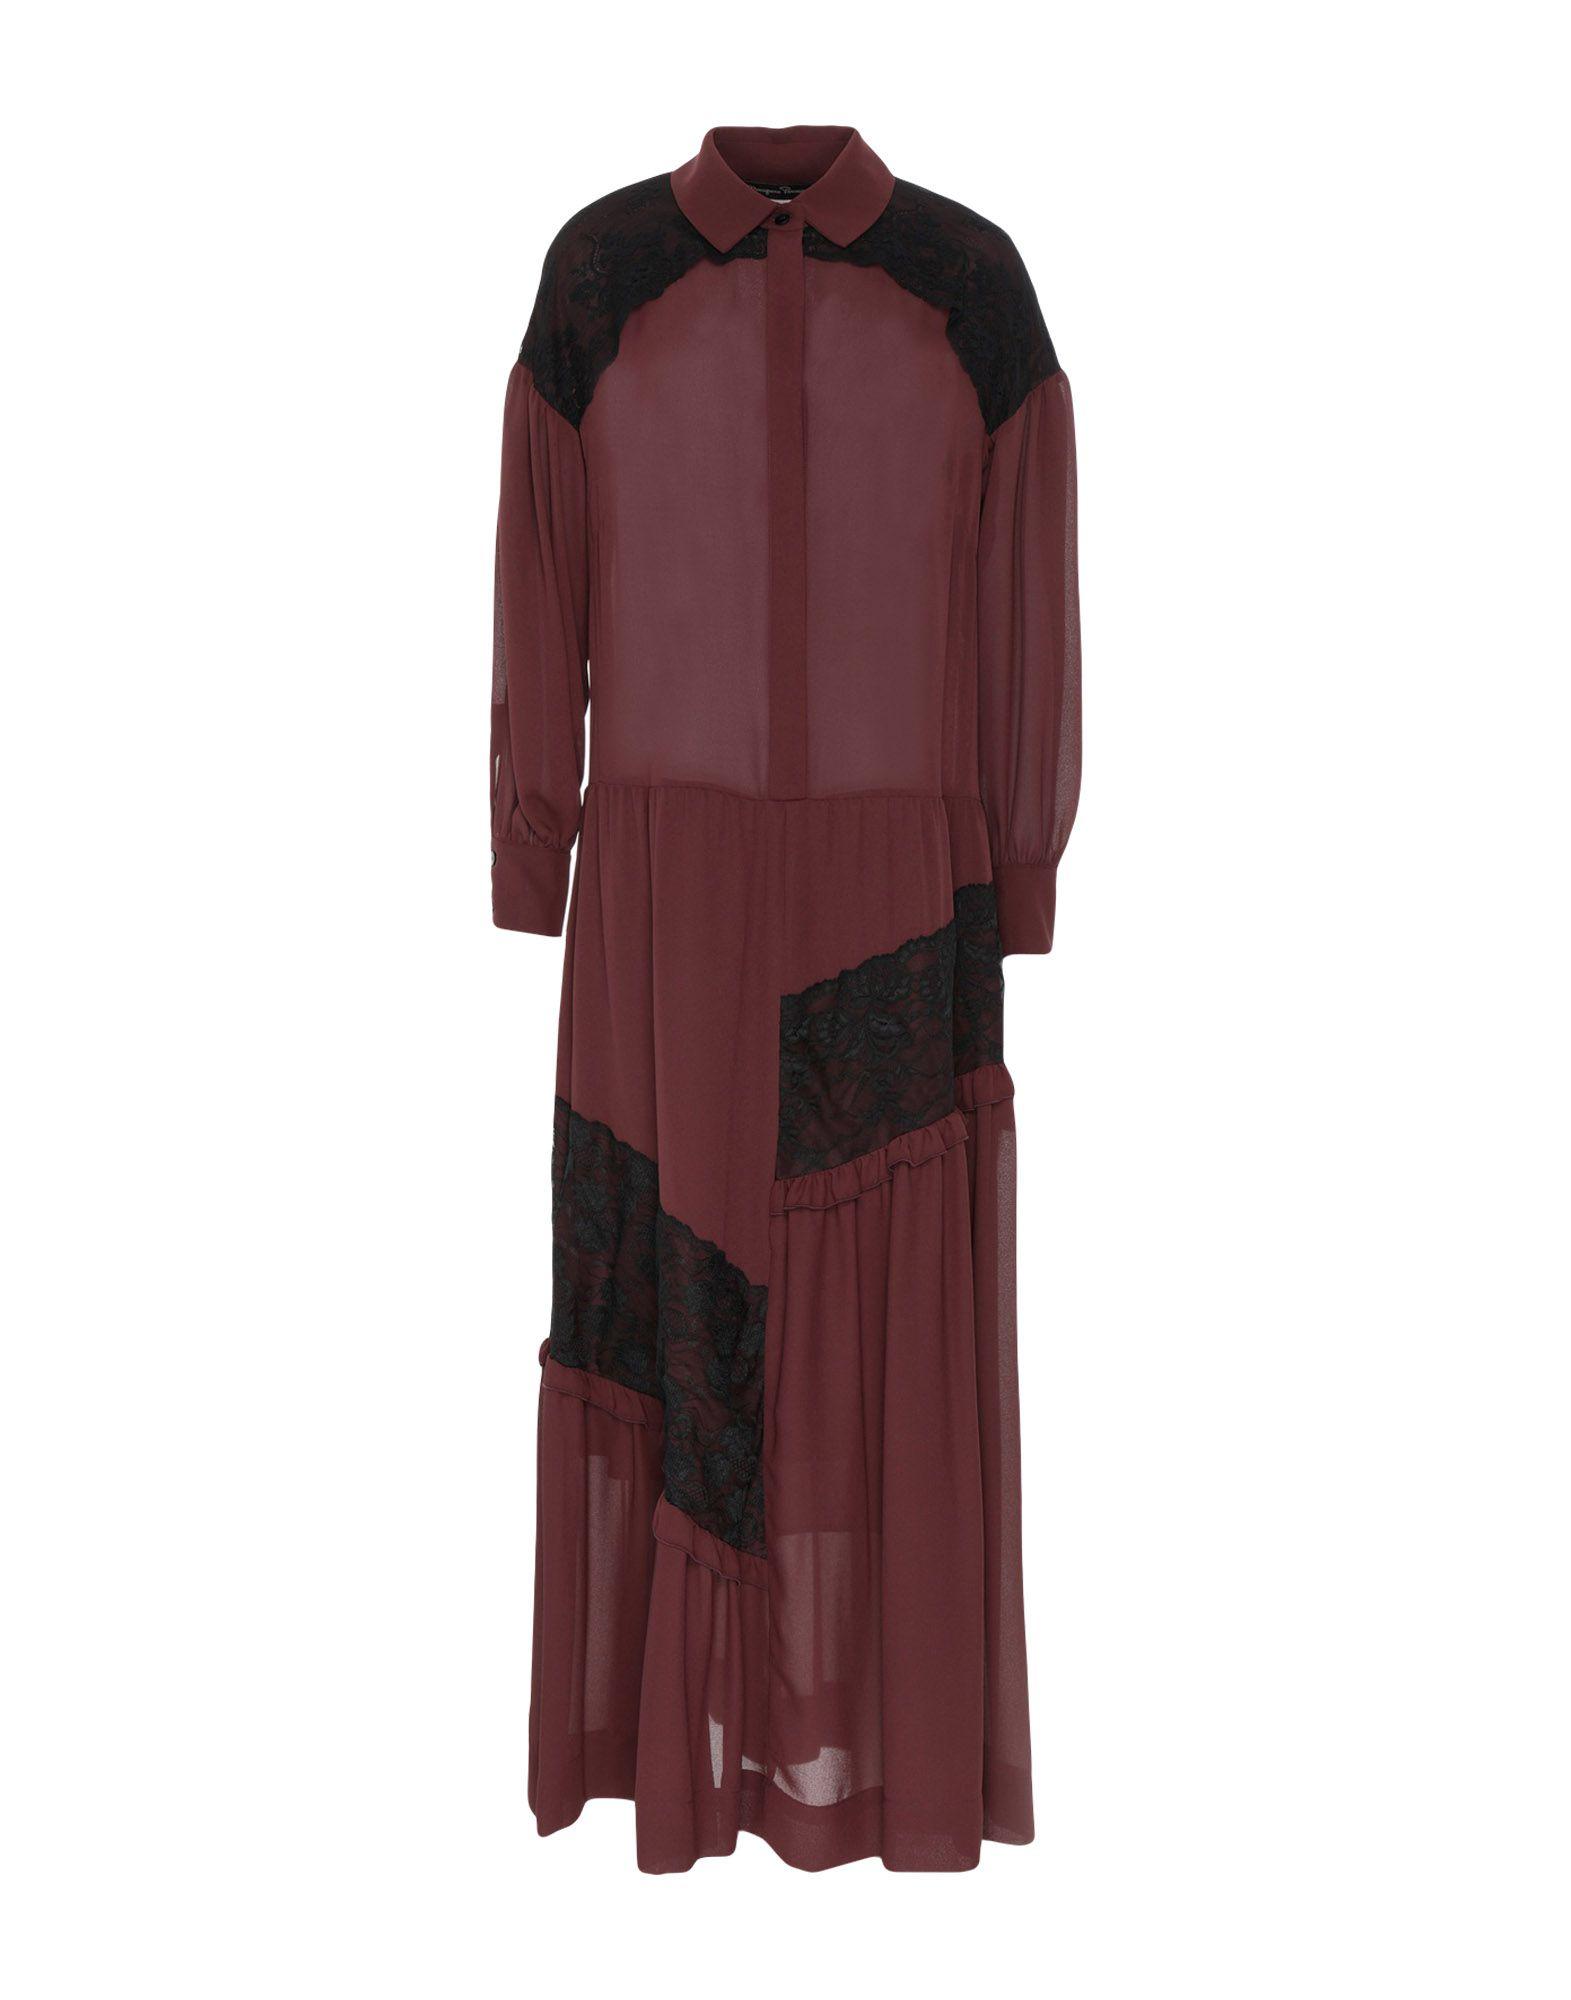 Mariagrazia Panizzi Lace Long Dress in Brown - Lyst